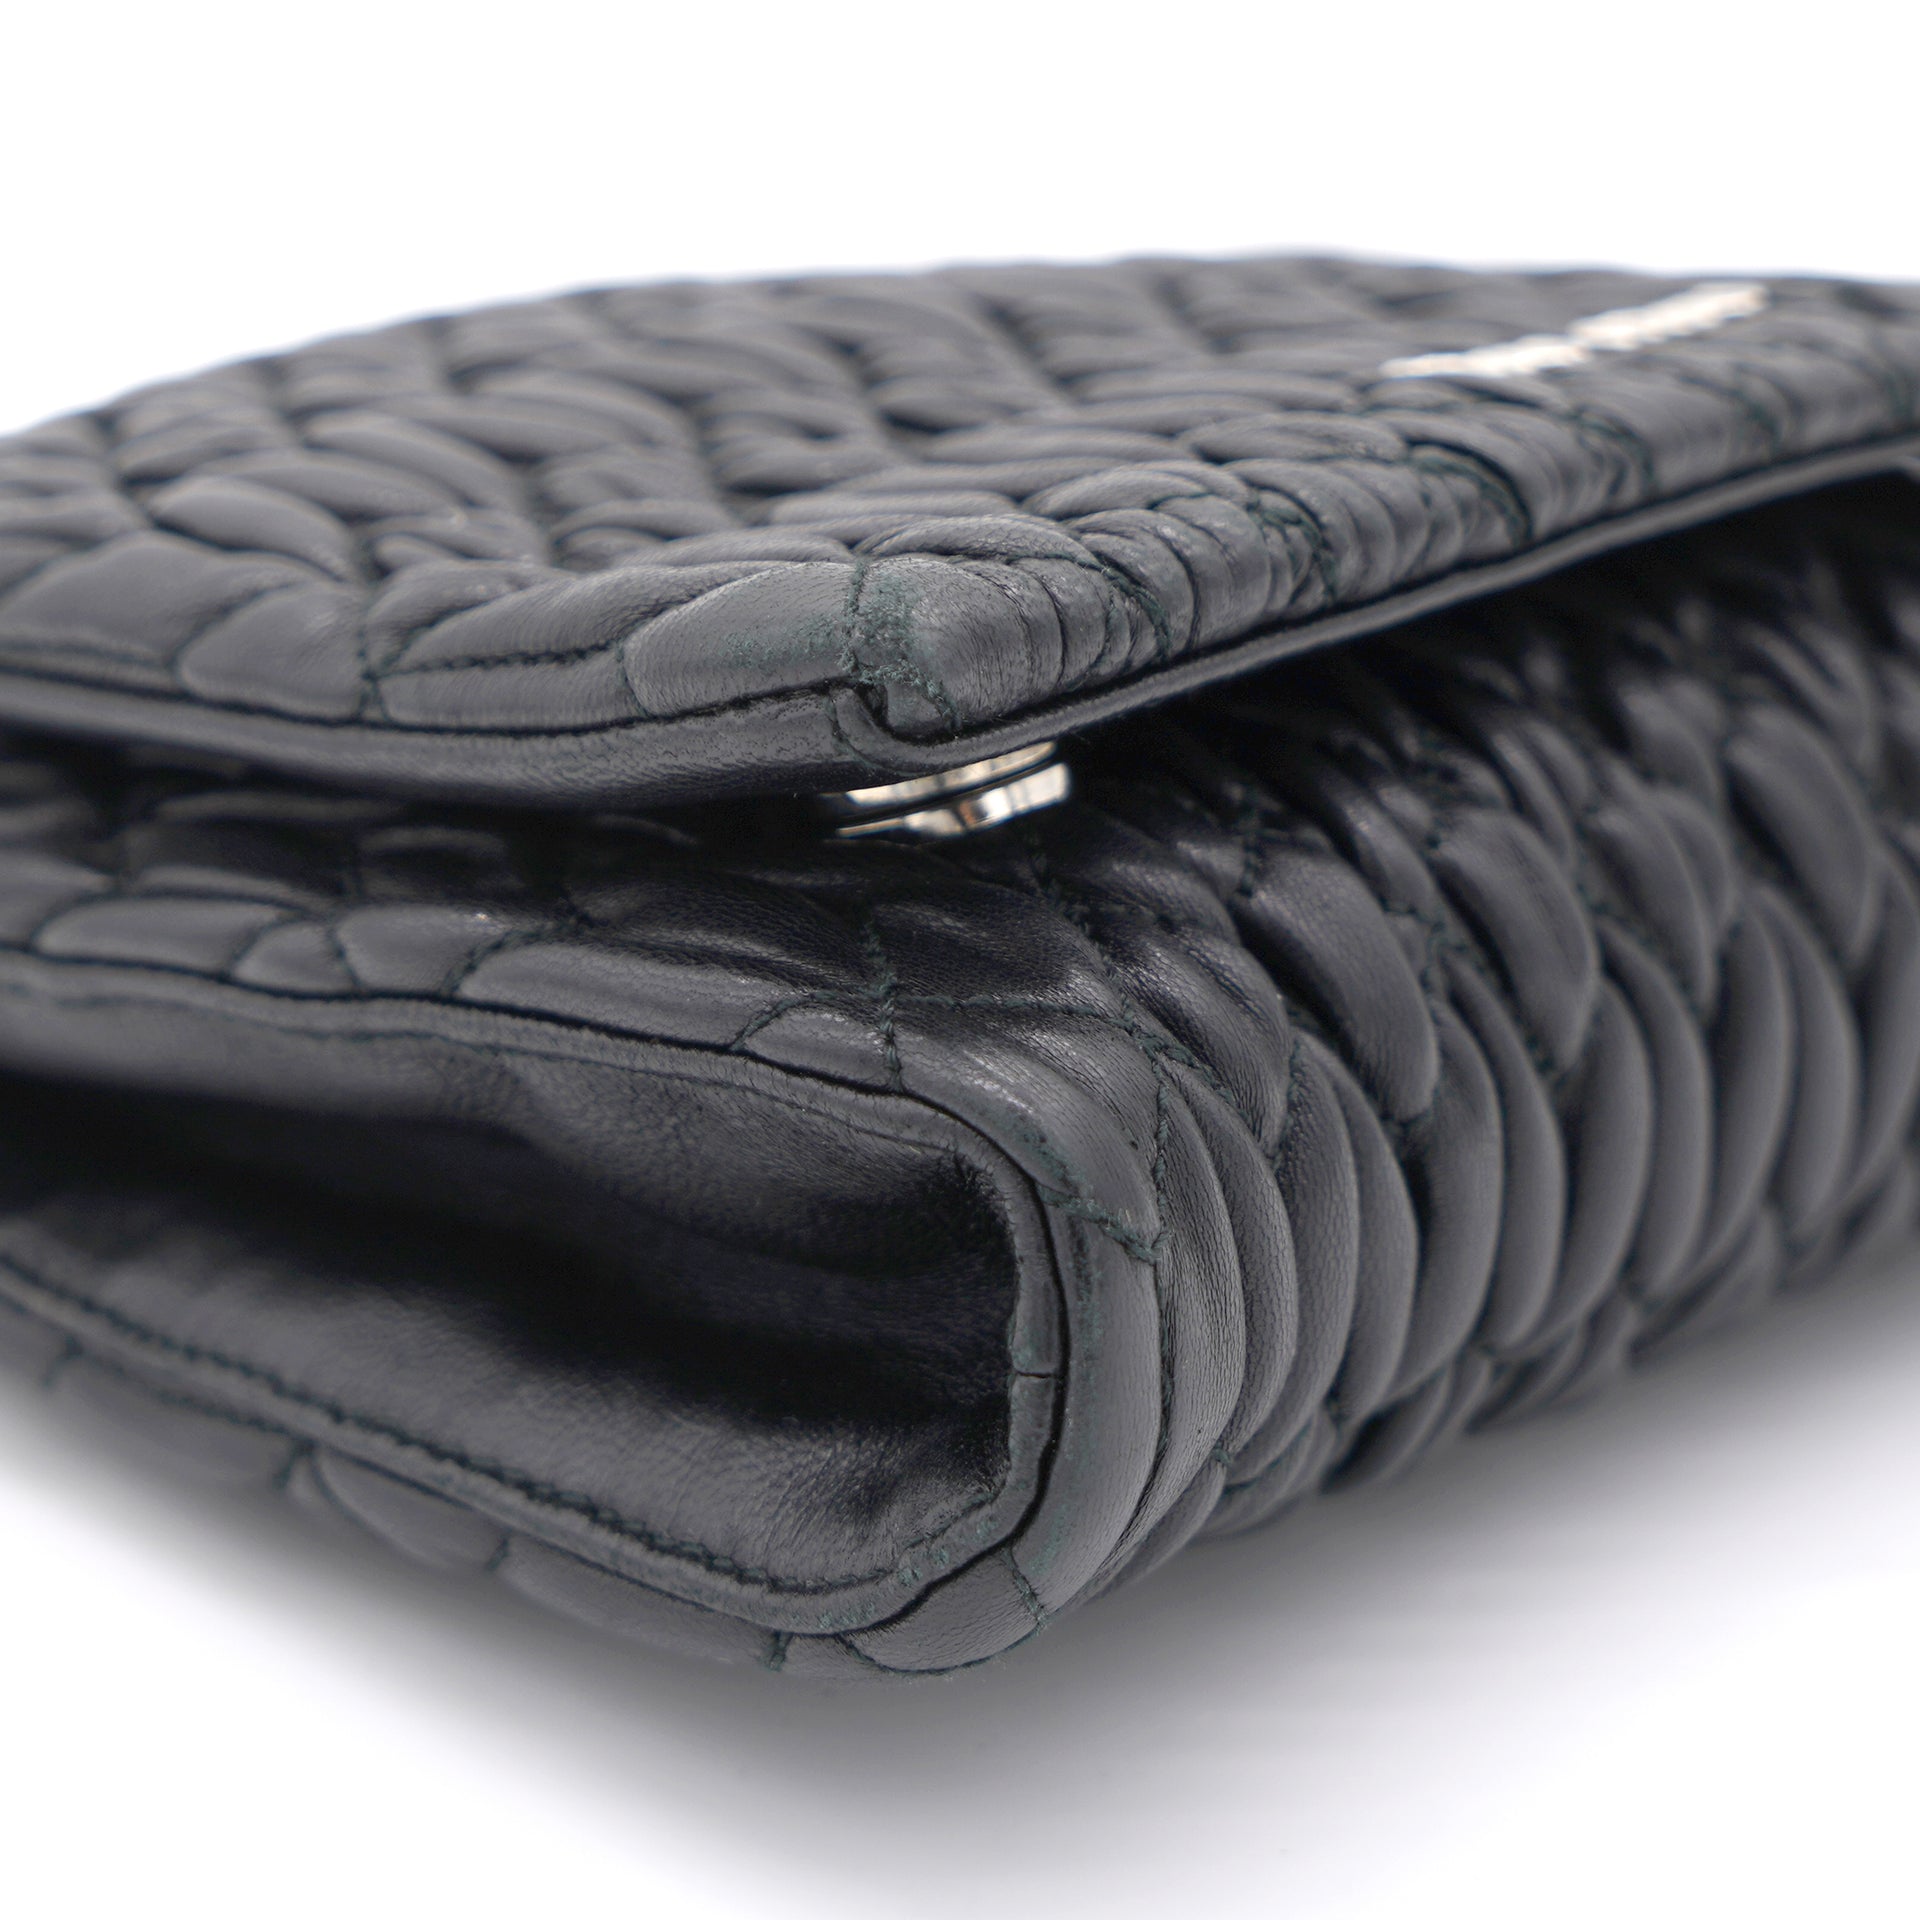 Black Matelasse Leather Crystal Crossbody Bag